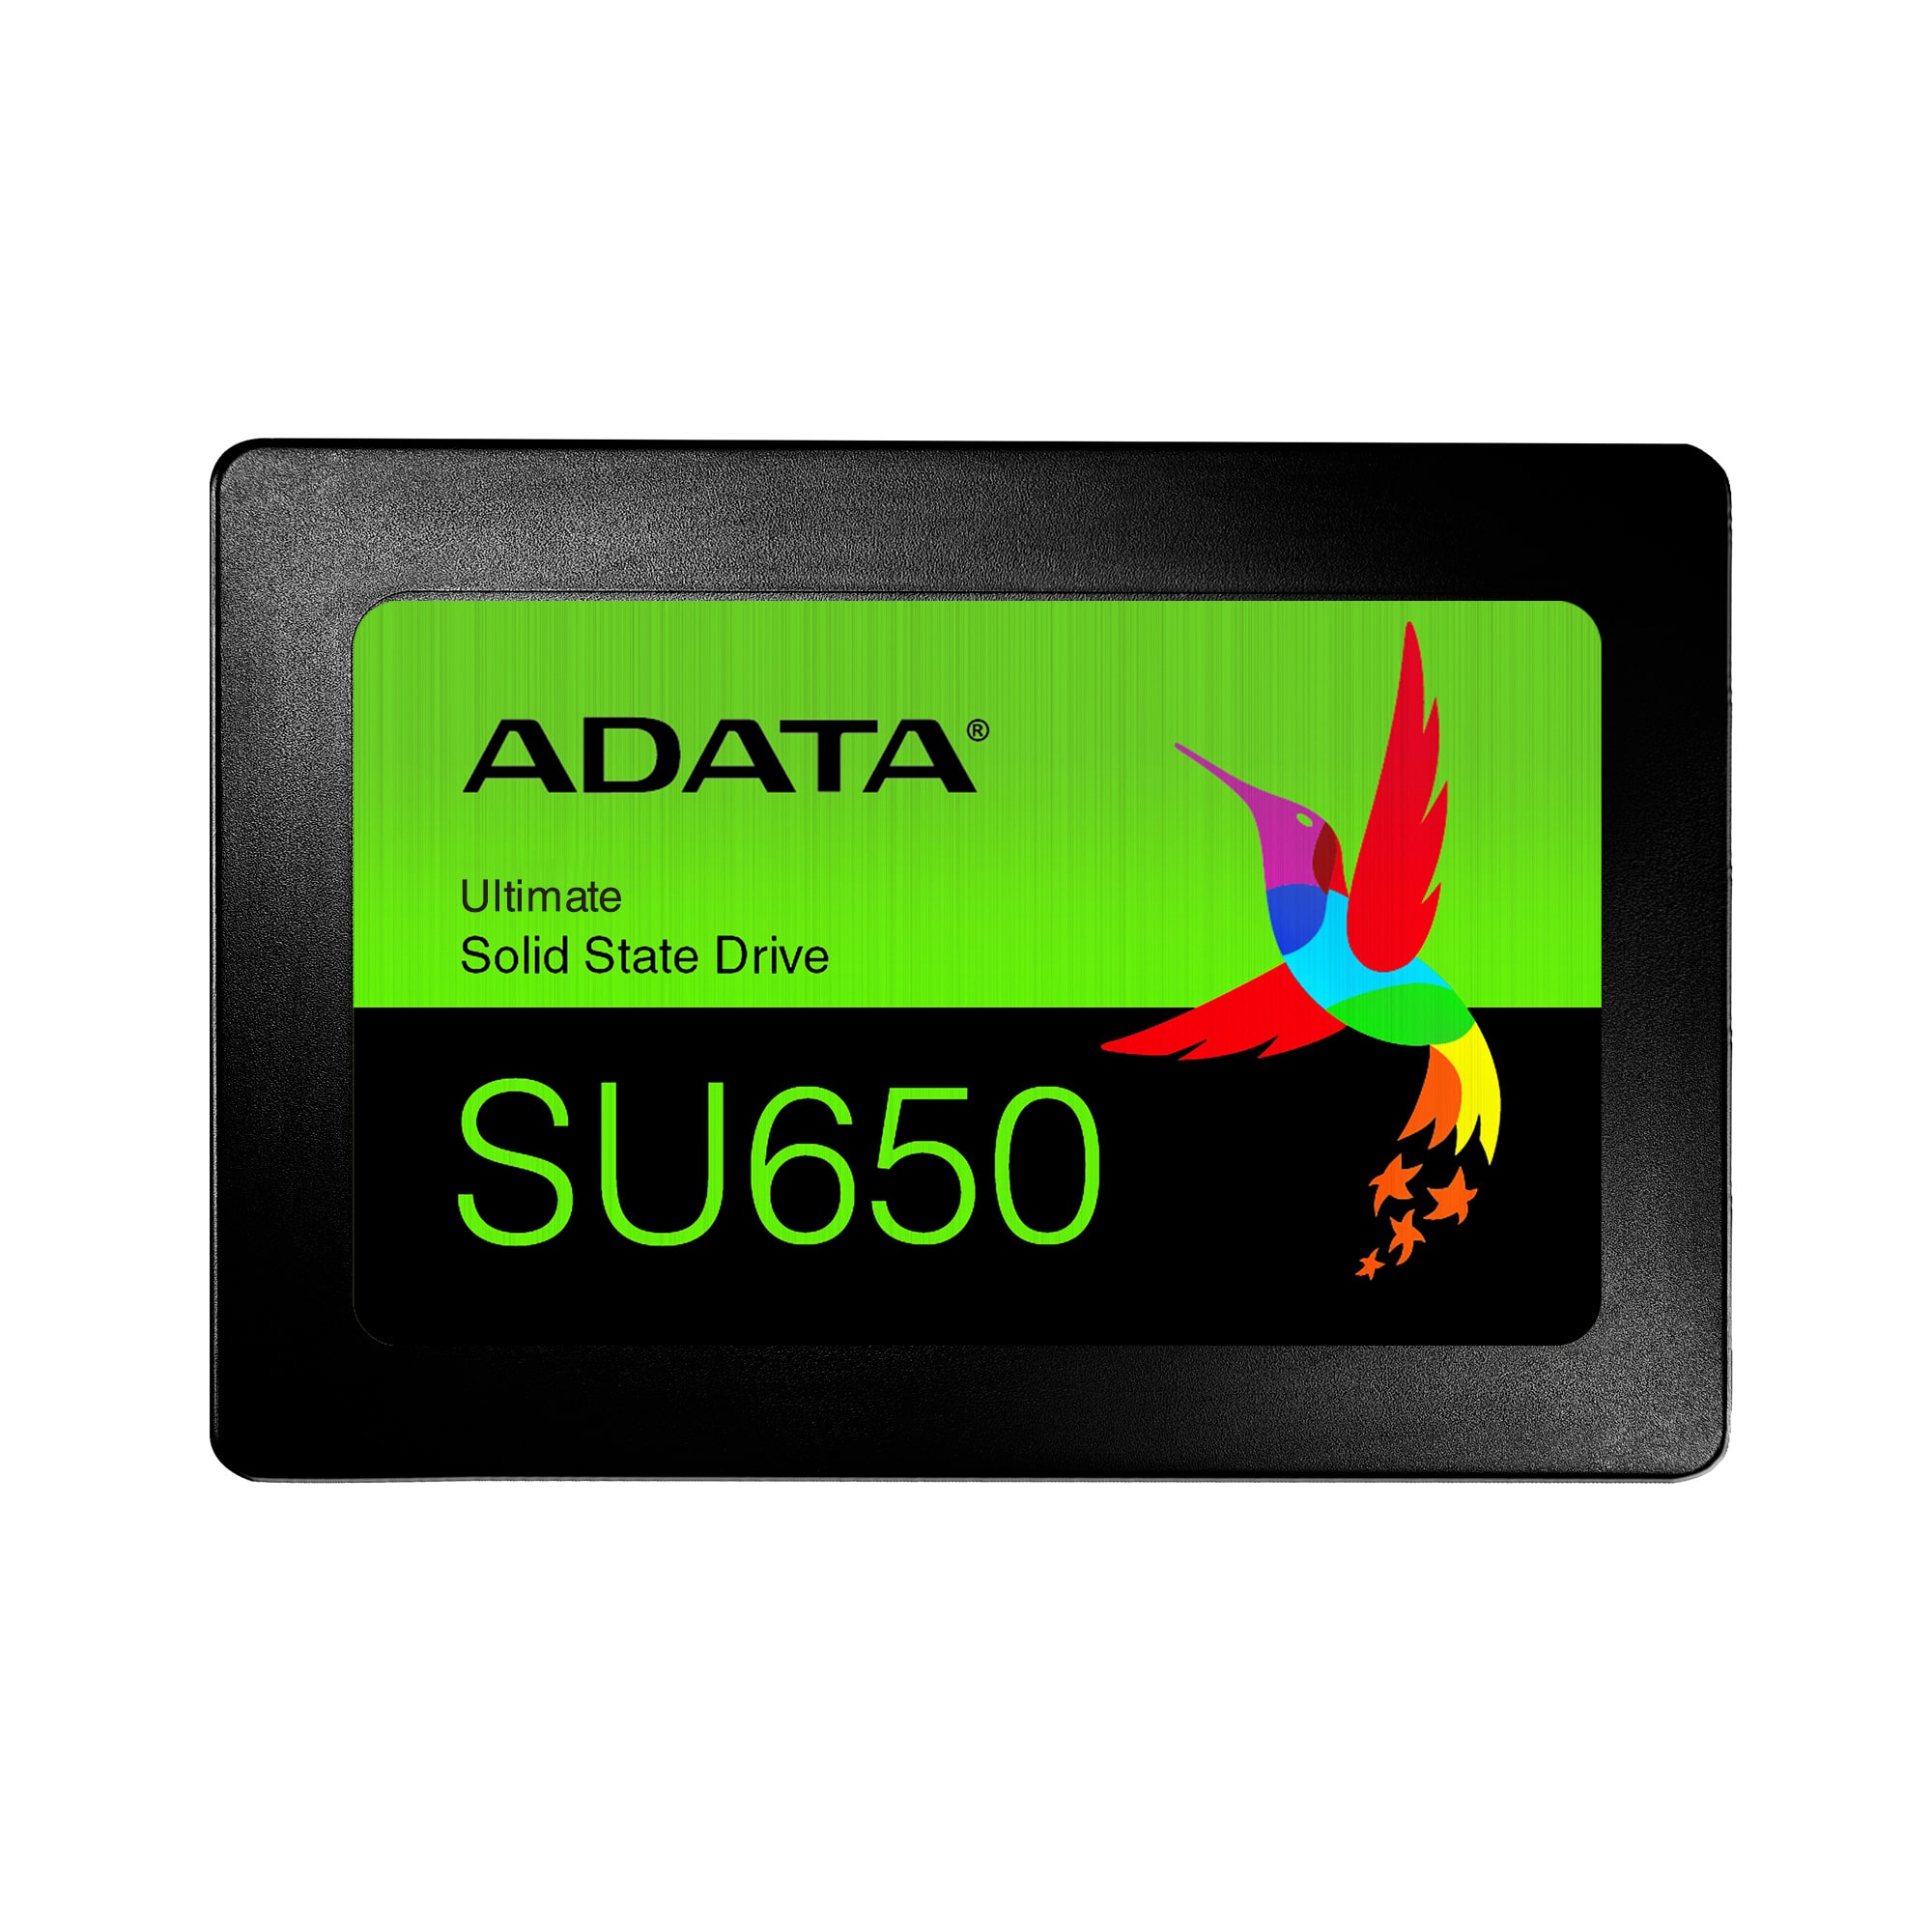 ADATA ULTIMATE SU650 2.5 240GB SOLID STATE DRIVE - ASU650SS240GTC